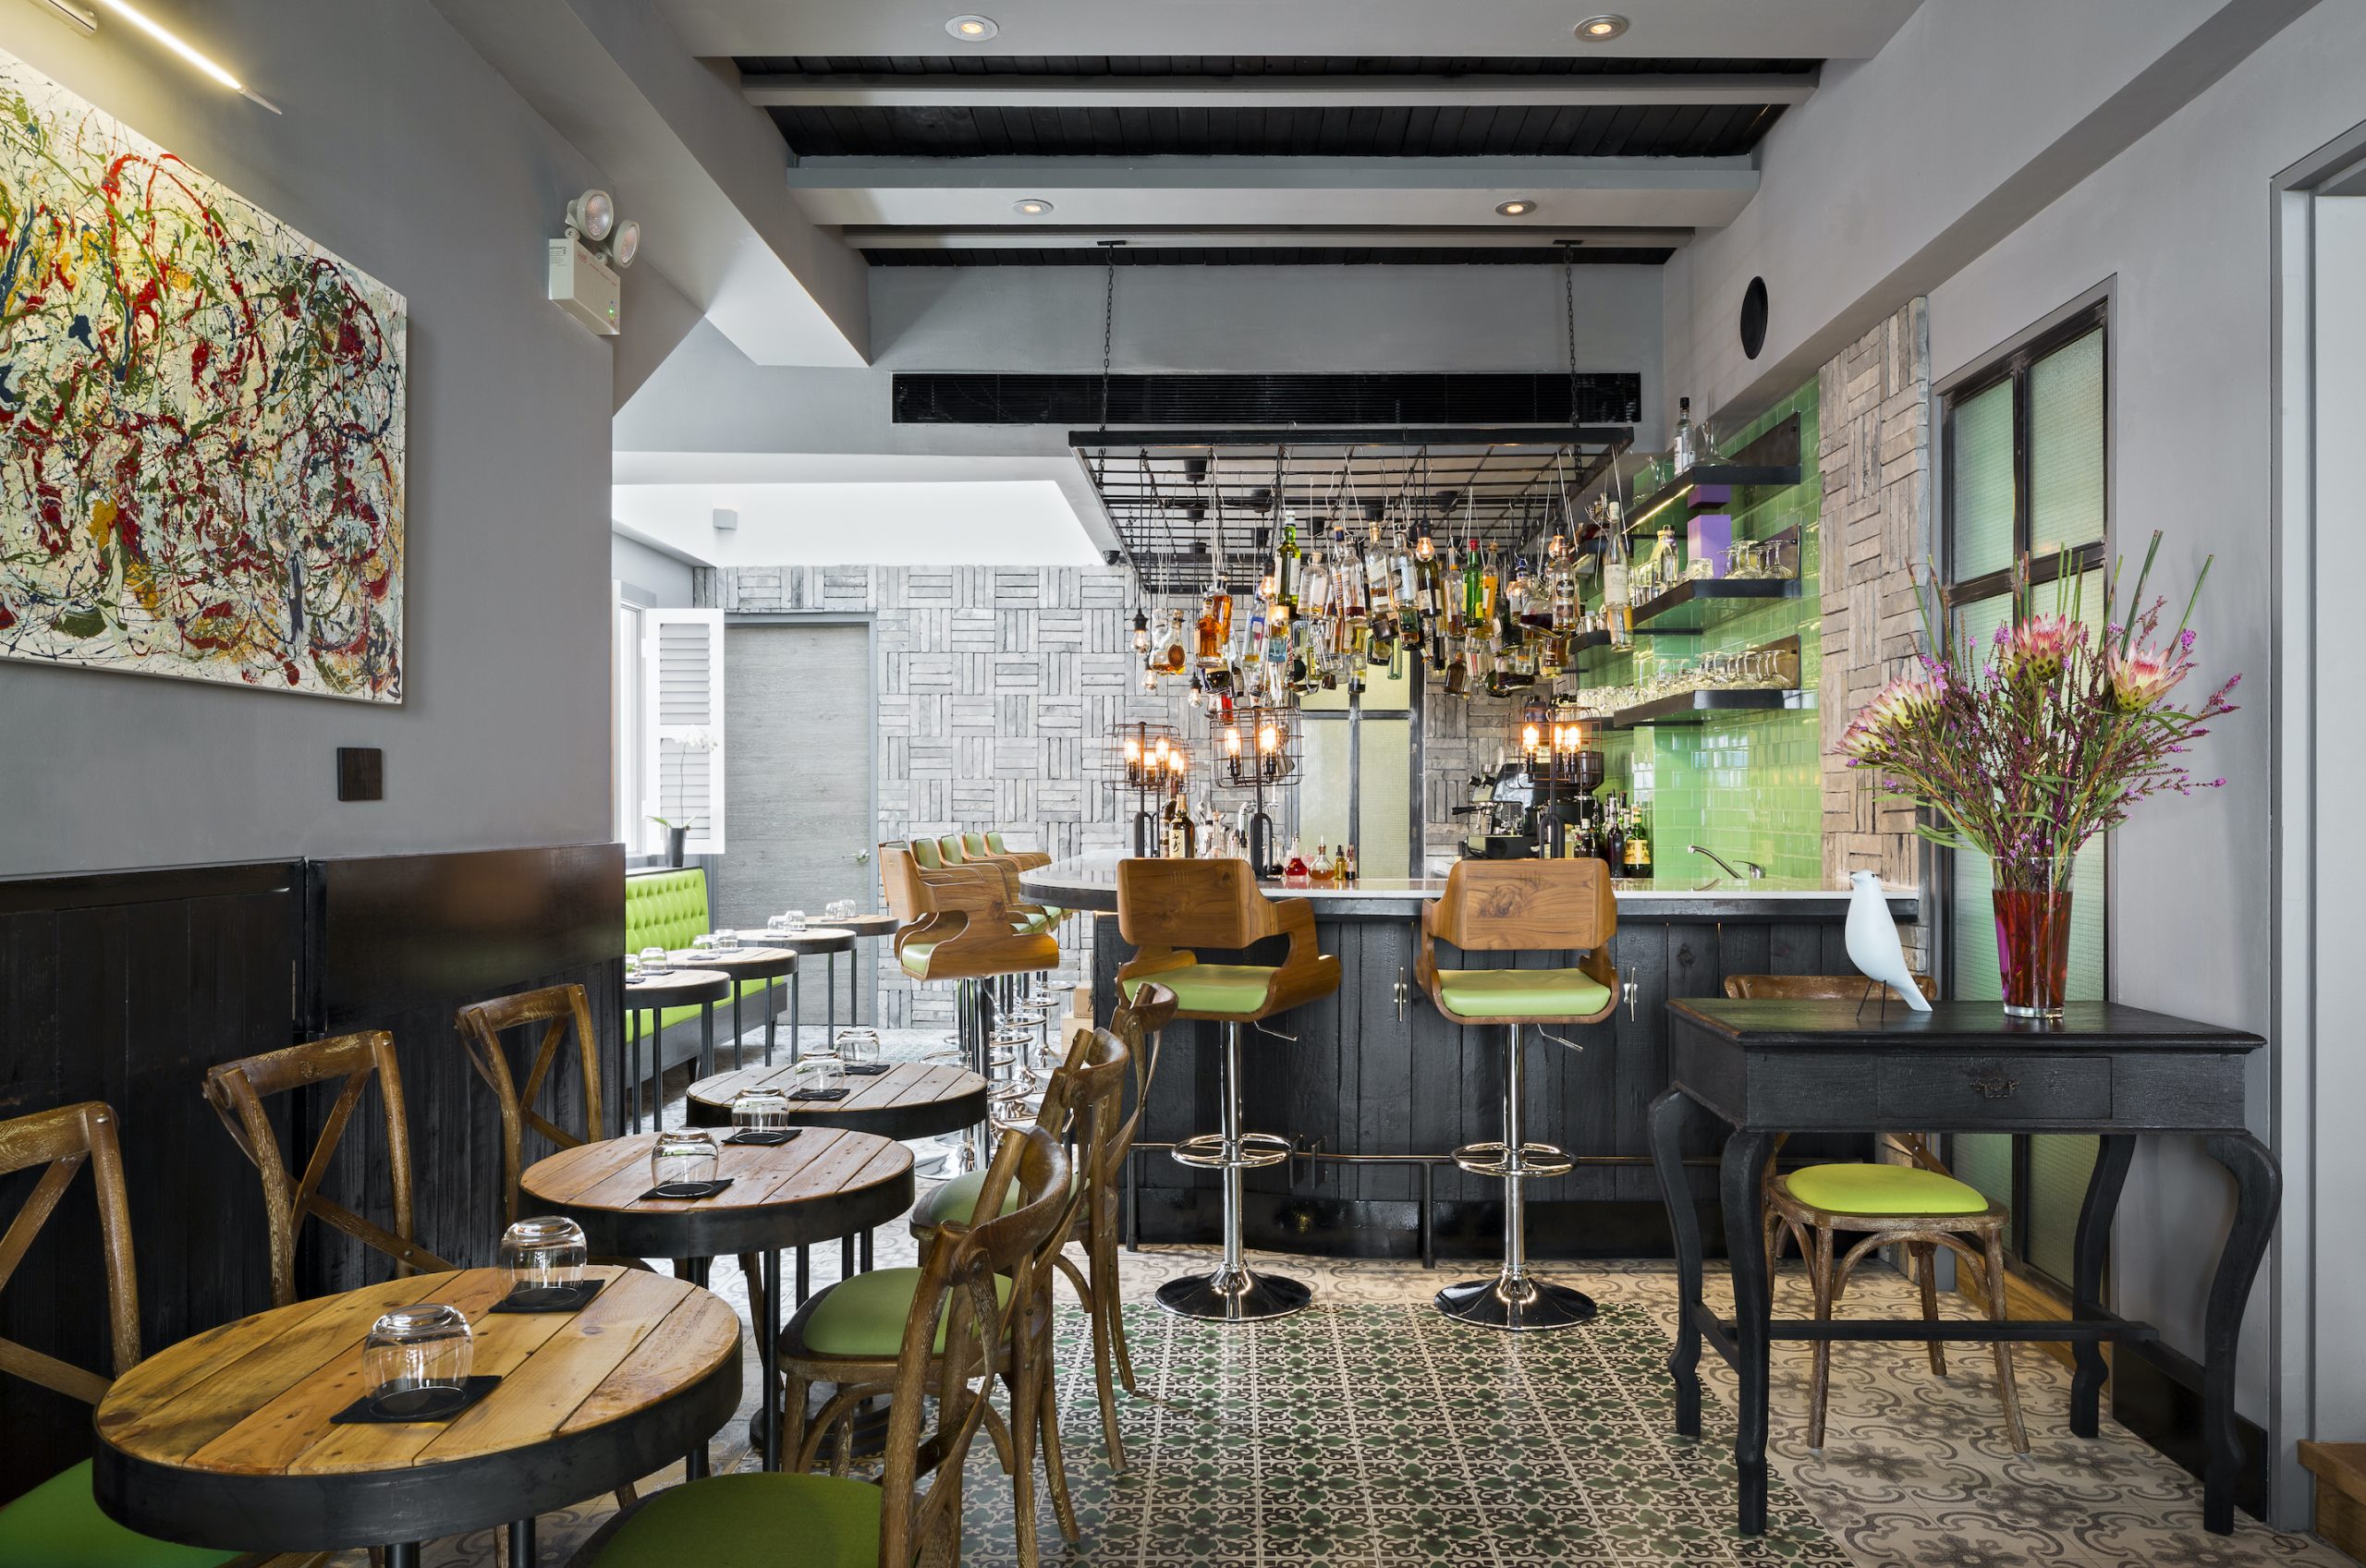 Tippling Club bar interior: Singapore's Tippling Club launches innovative new bar menu